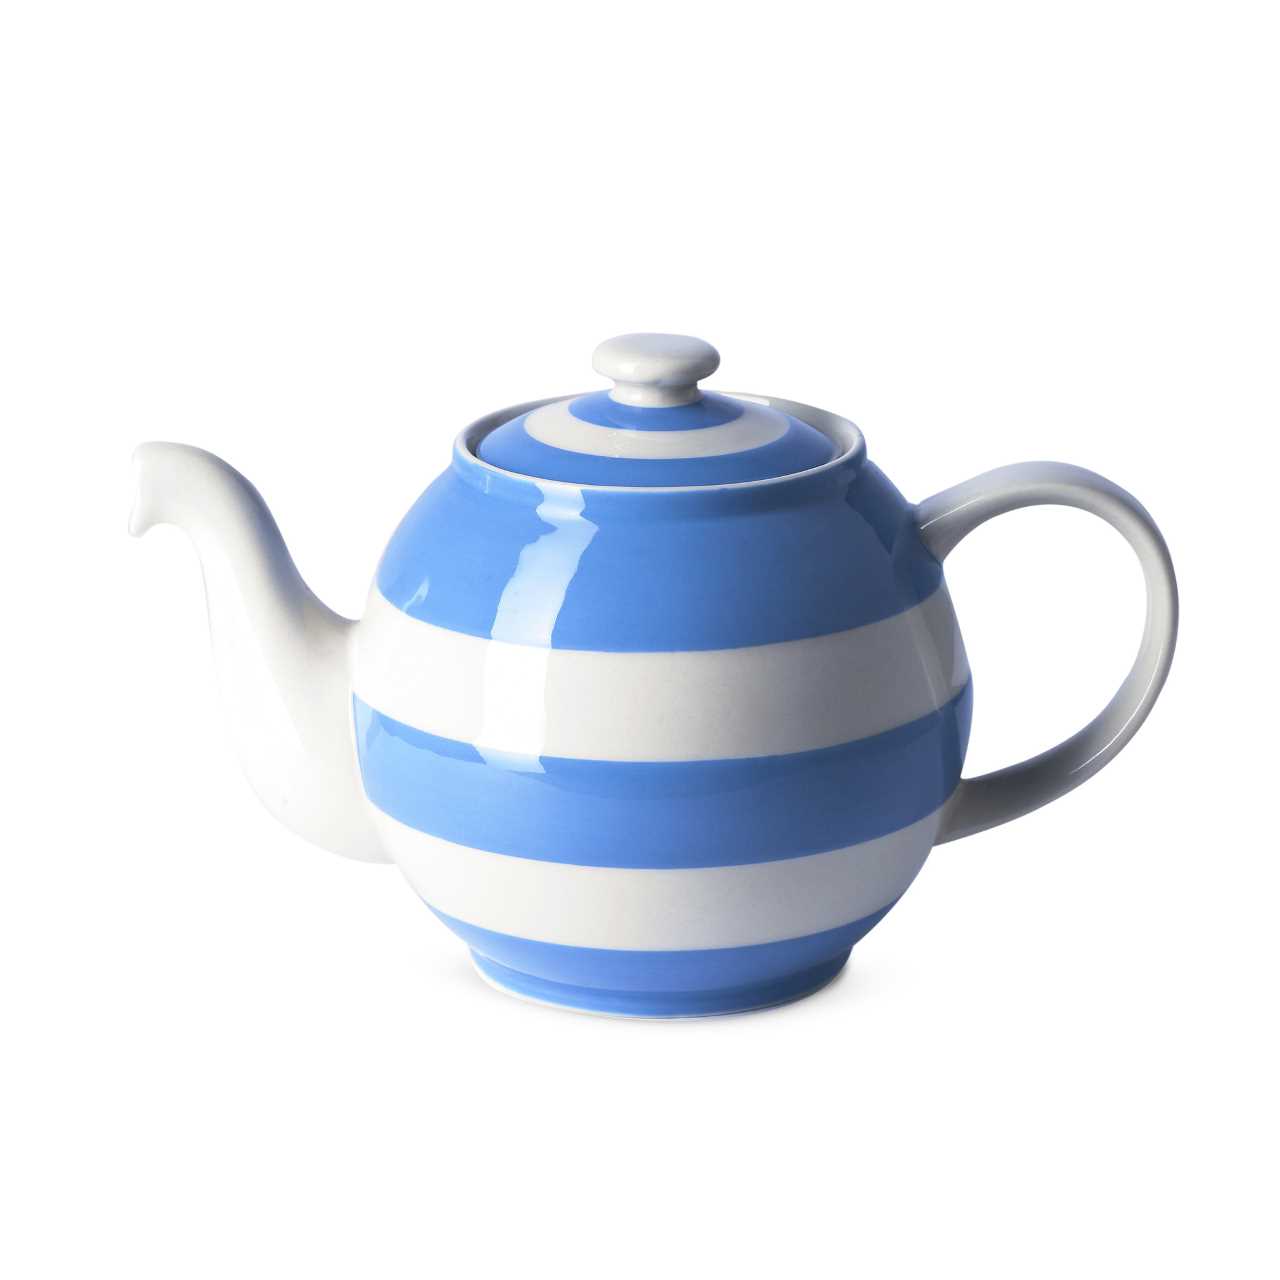 Cornishware Pottery Teapot in blue stripes